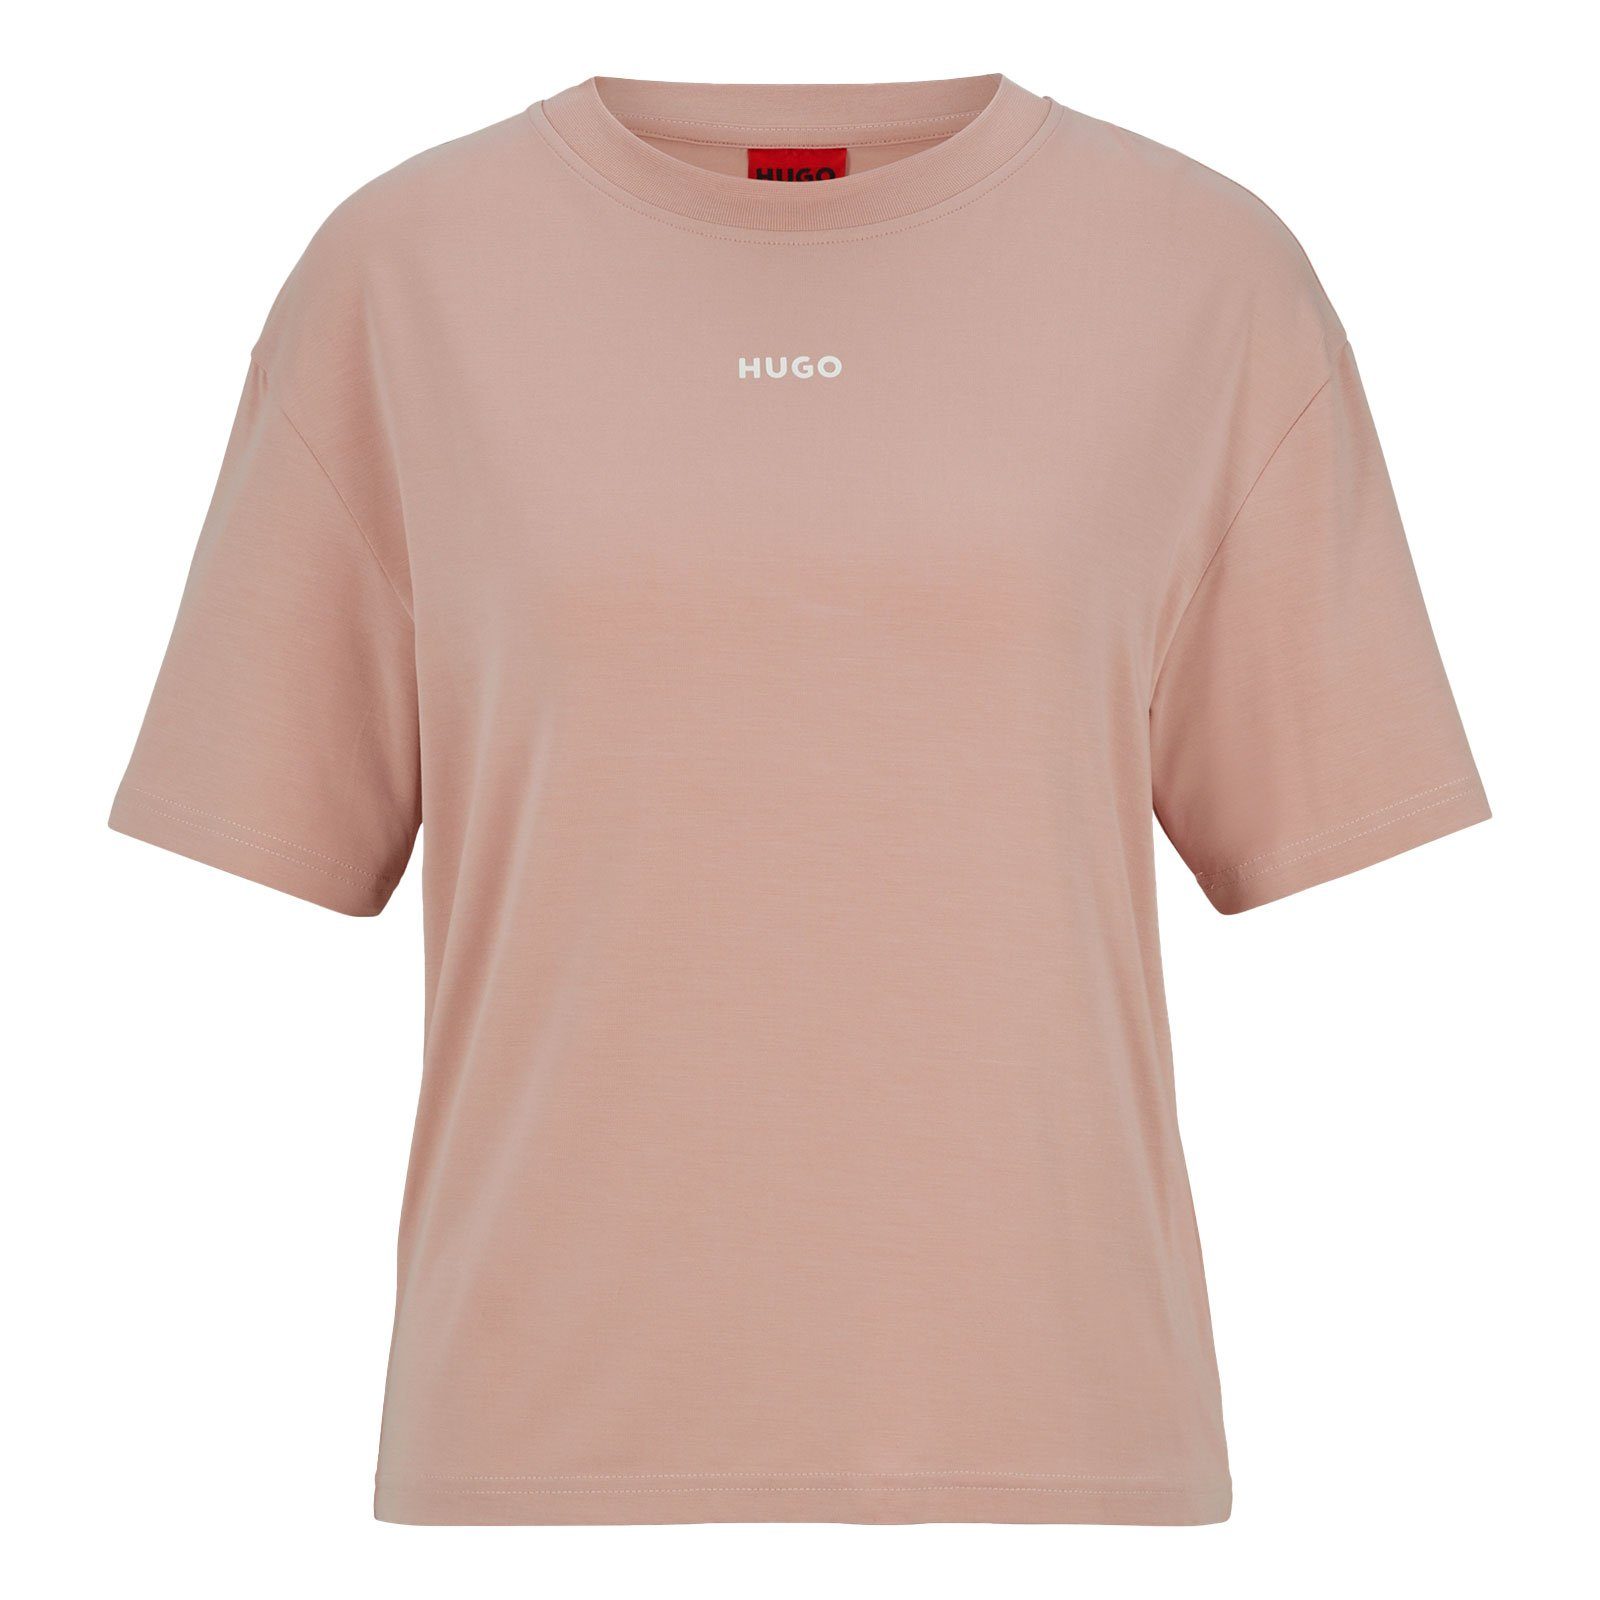 Shirt T-Shirt HUGO Silikon-Logo Shuffle pink light markentypischem 687 mit